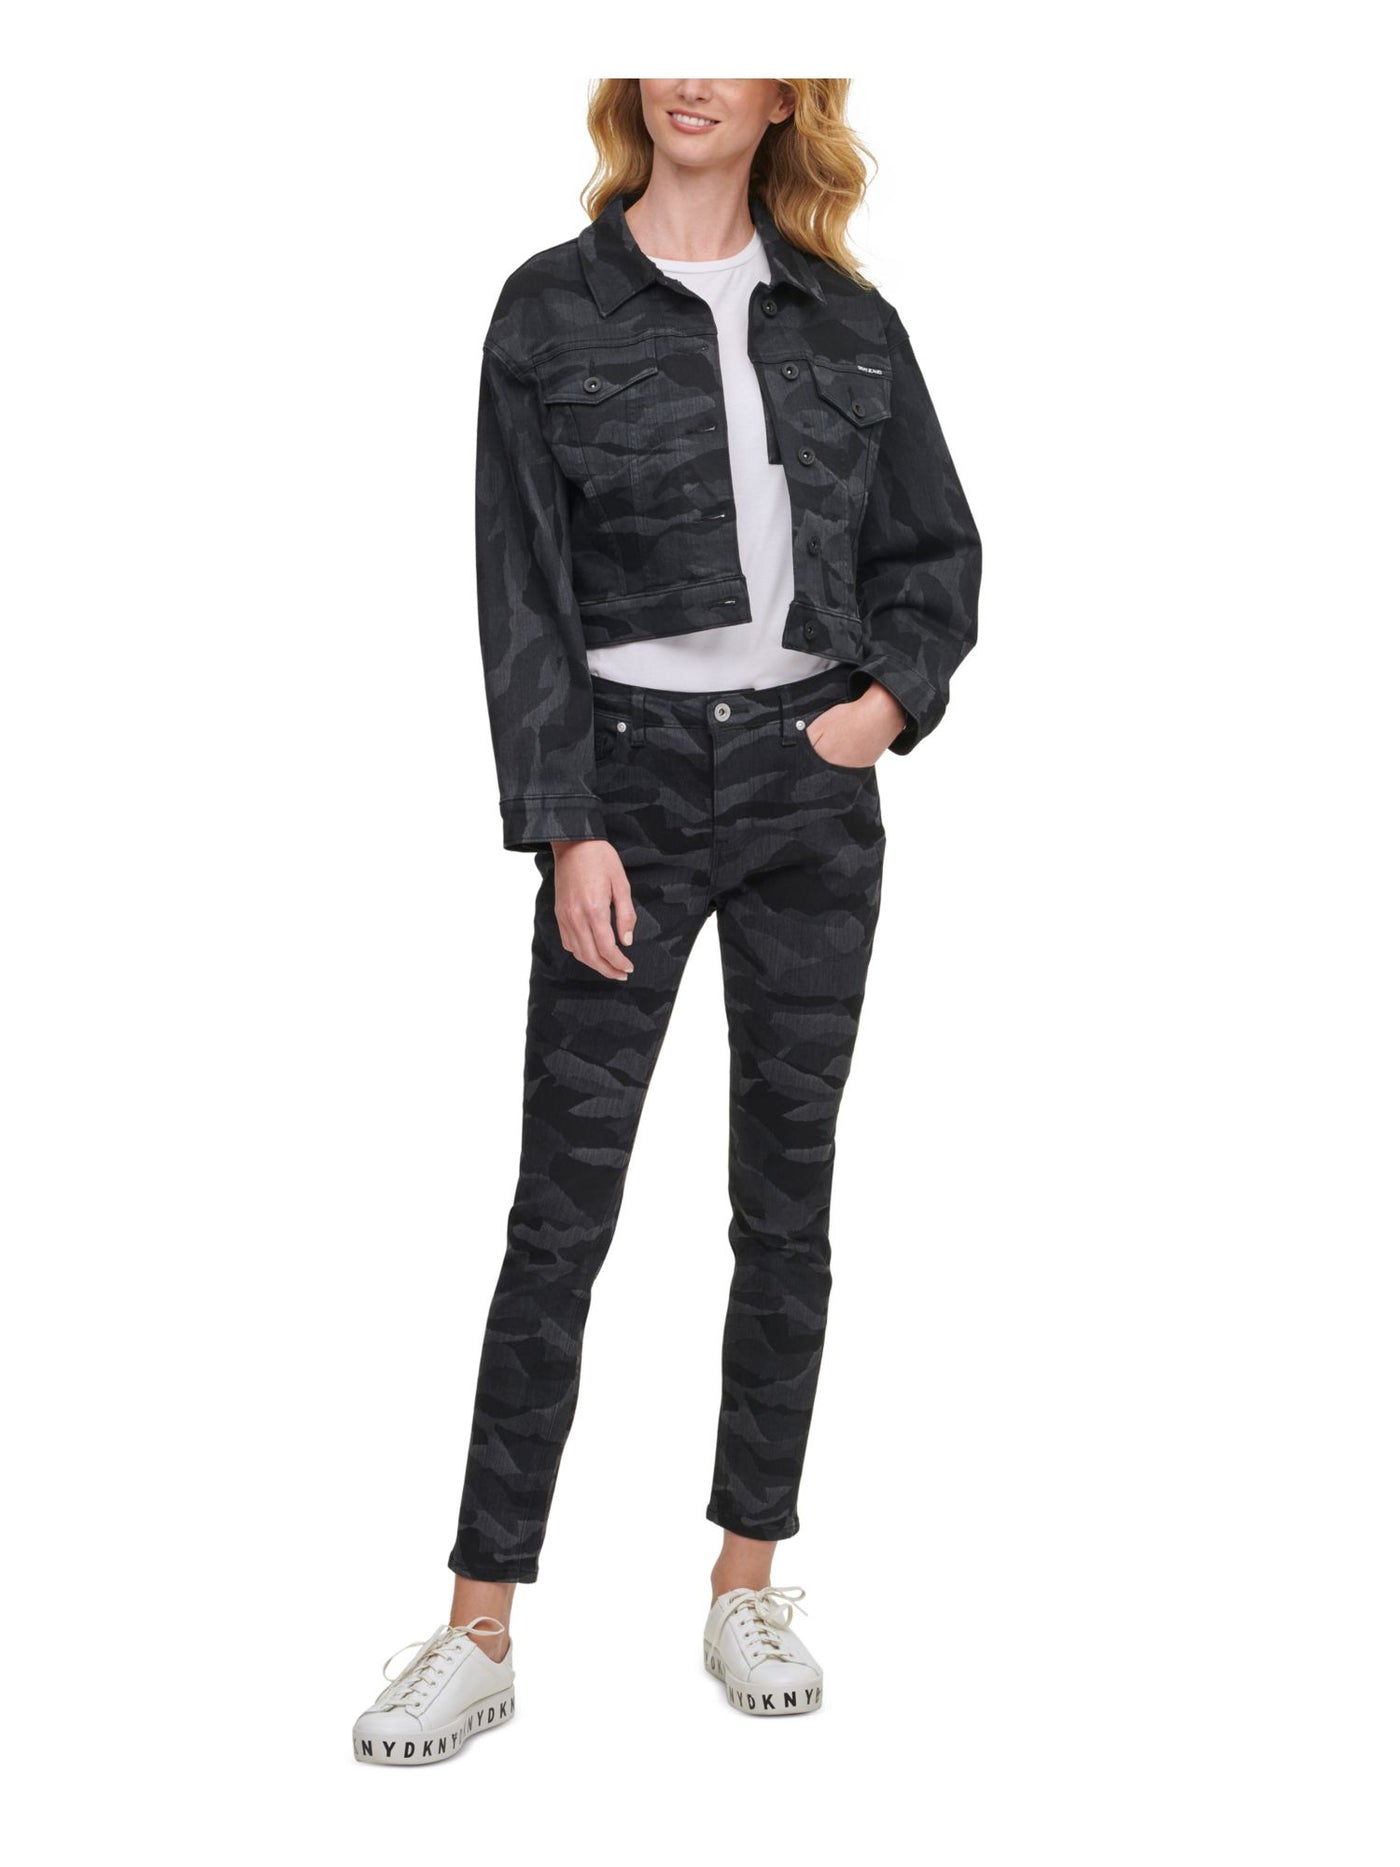 DKNY Womens Black Camouflage Denim Jacket XL